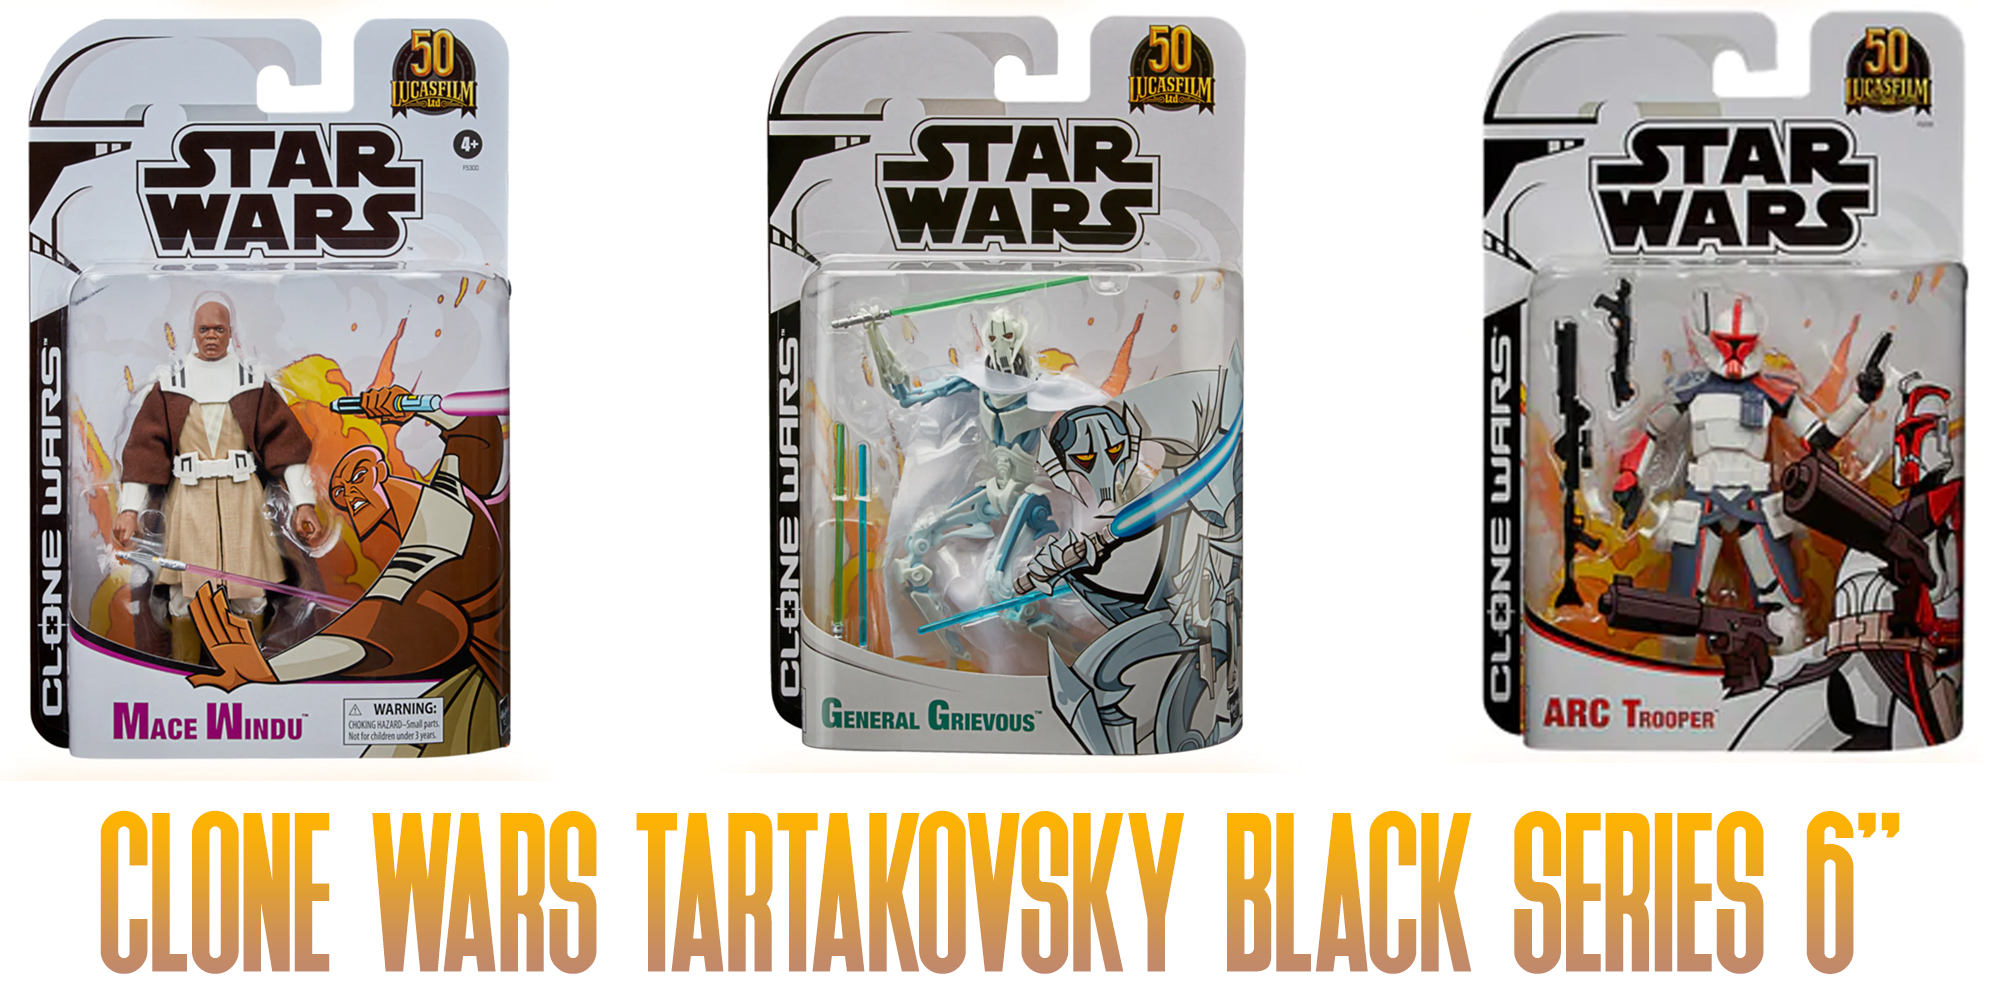 Tartakovsky Clone Wars Is Coming To The Black Series!